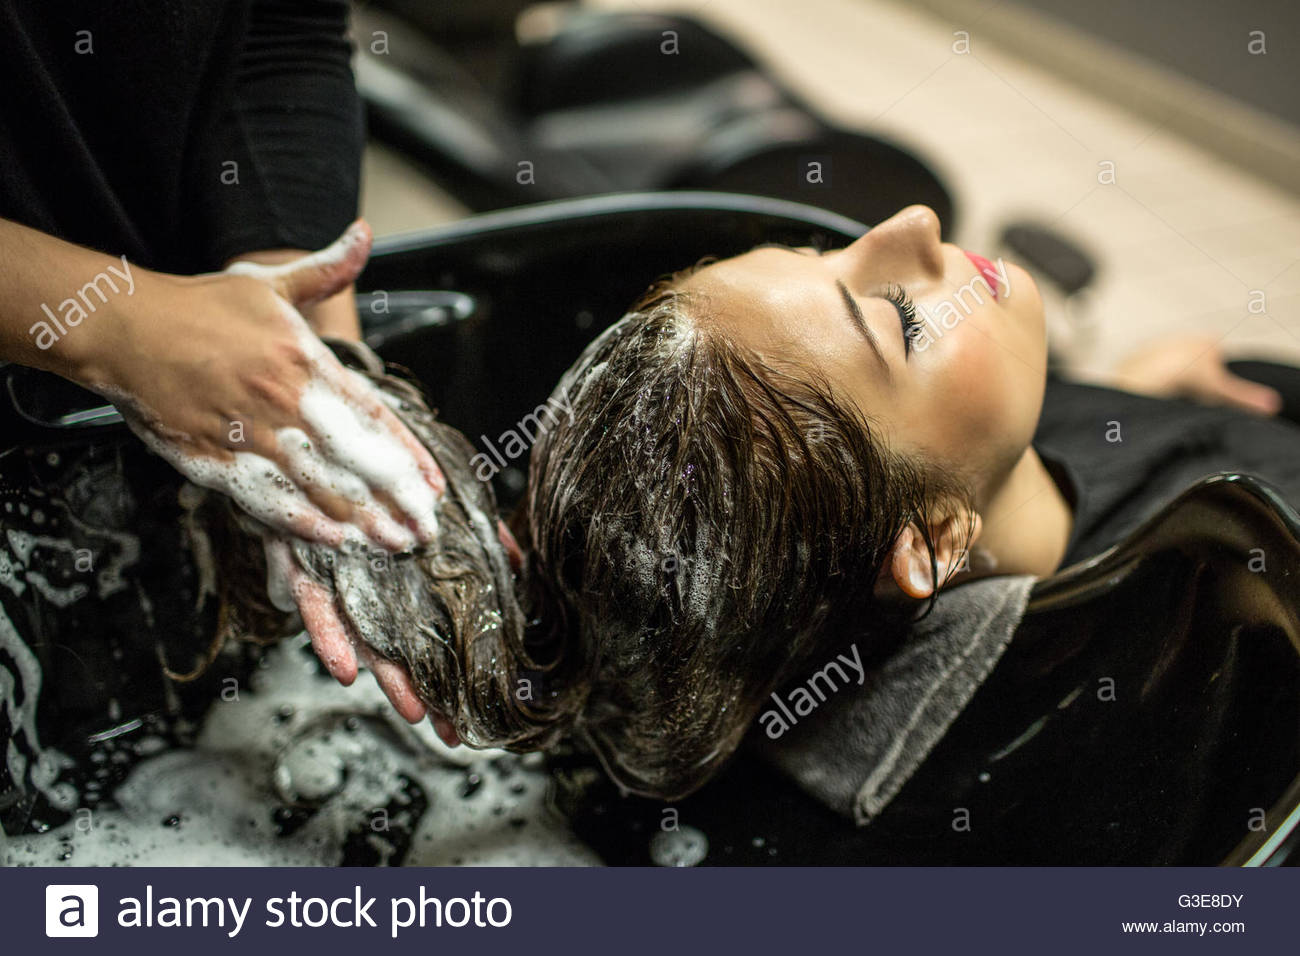 Brunette Woman With Long Hair At Shampoo Bowl At Hair Salon